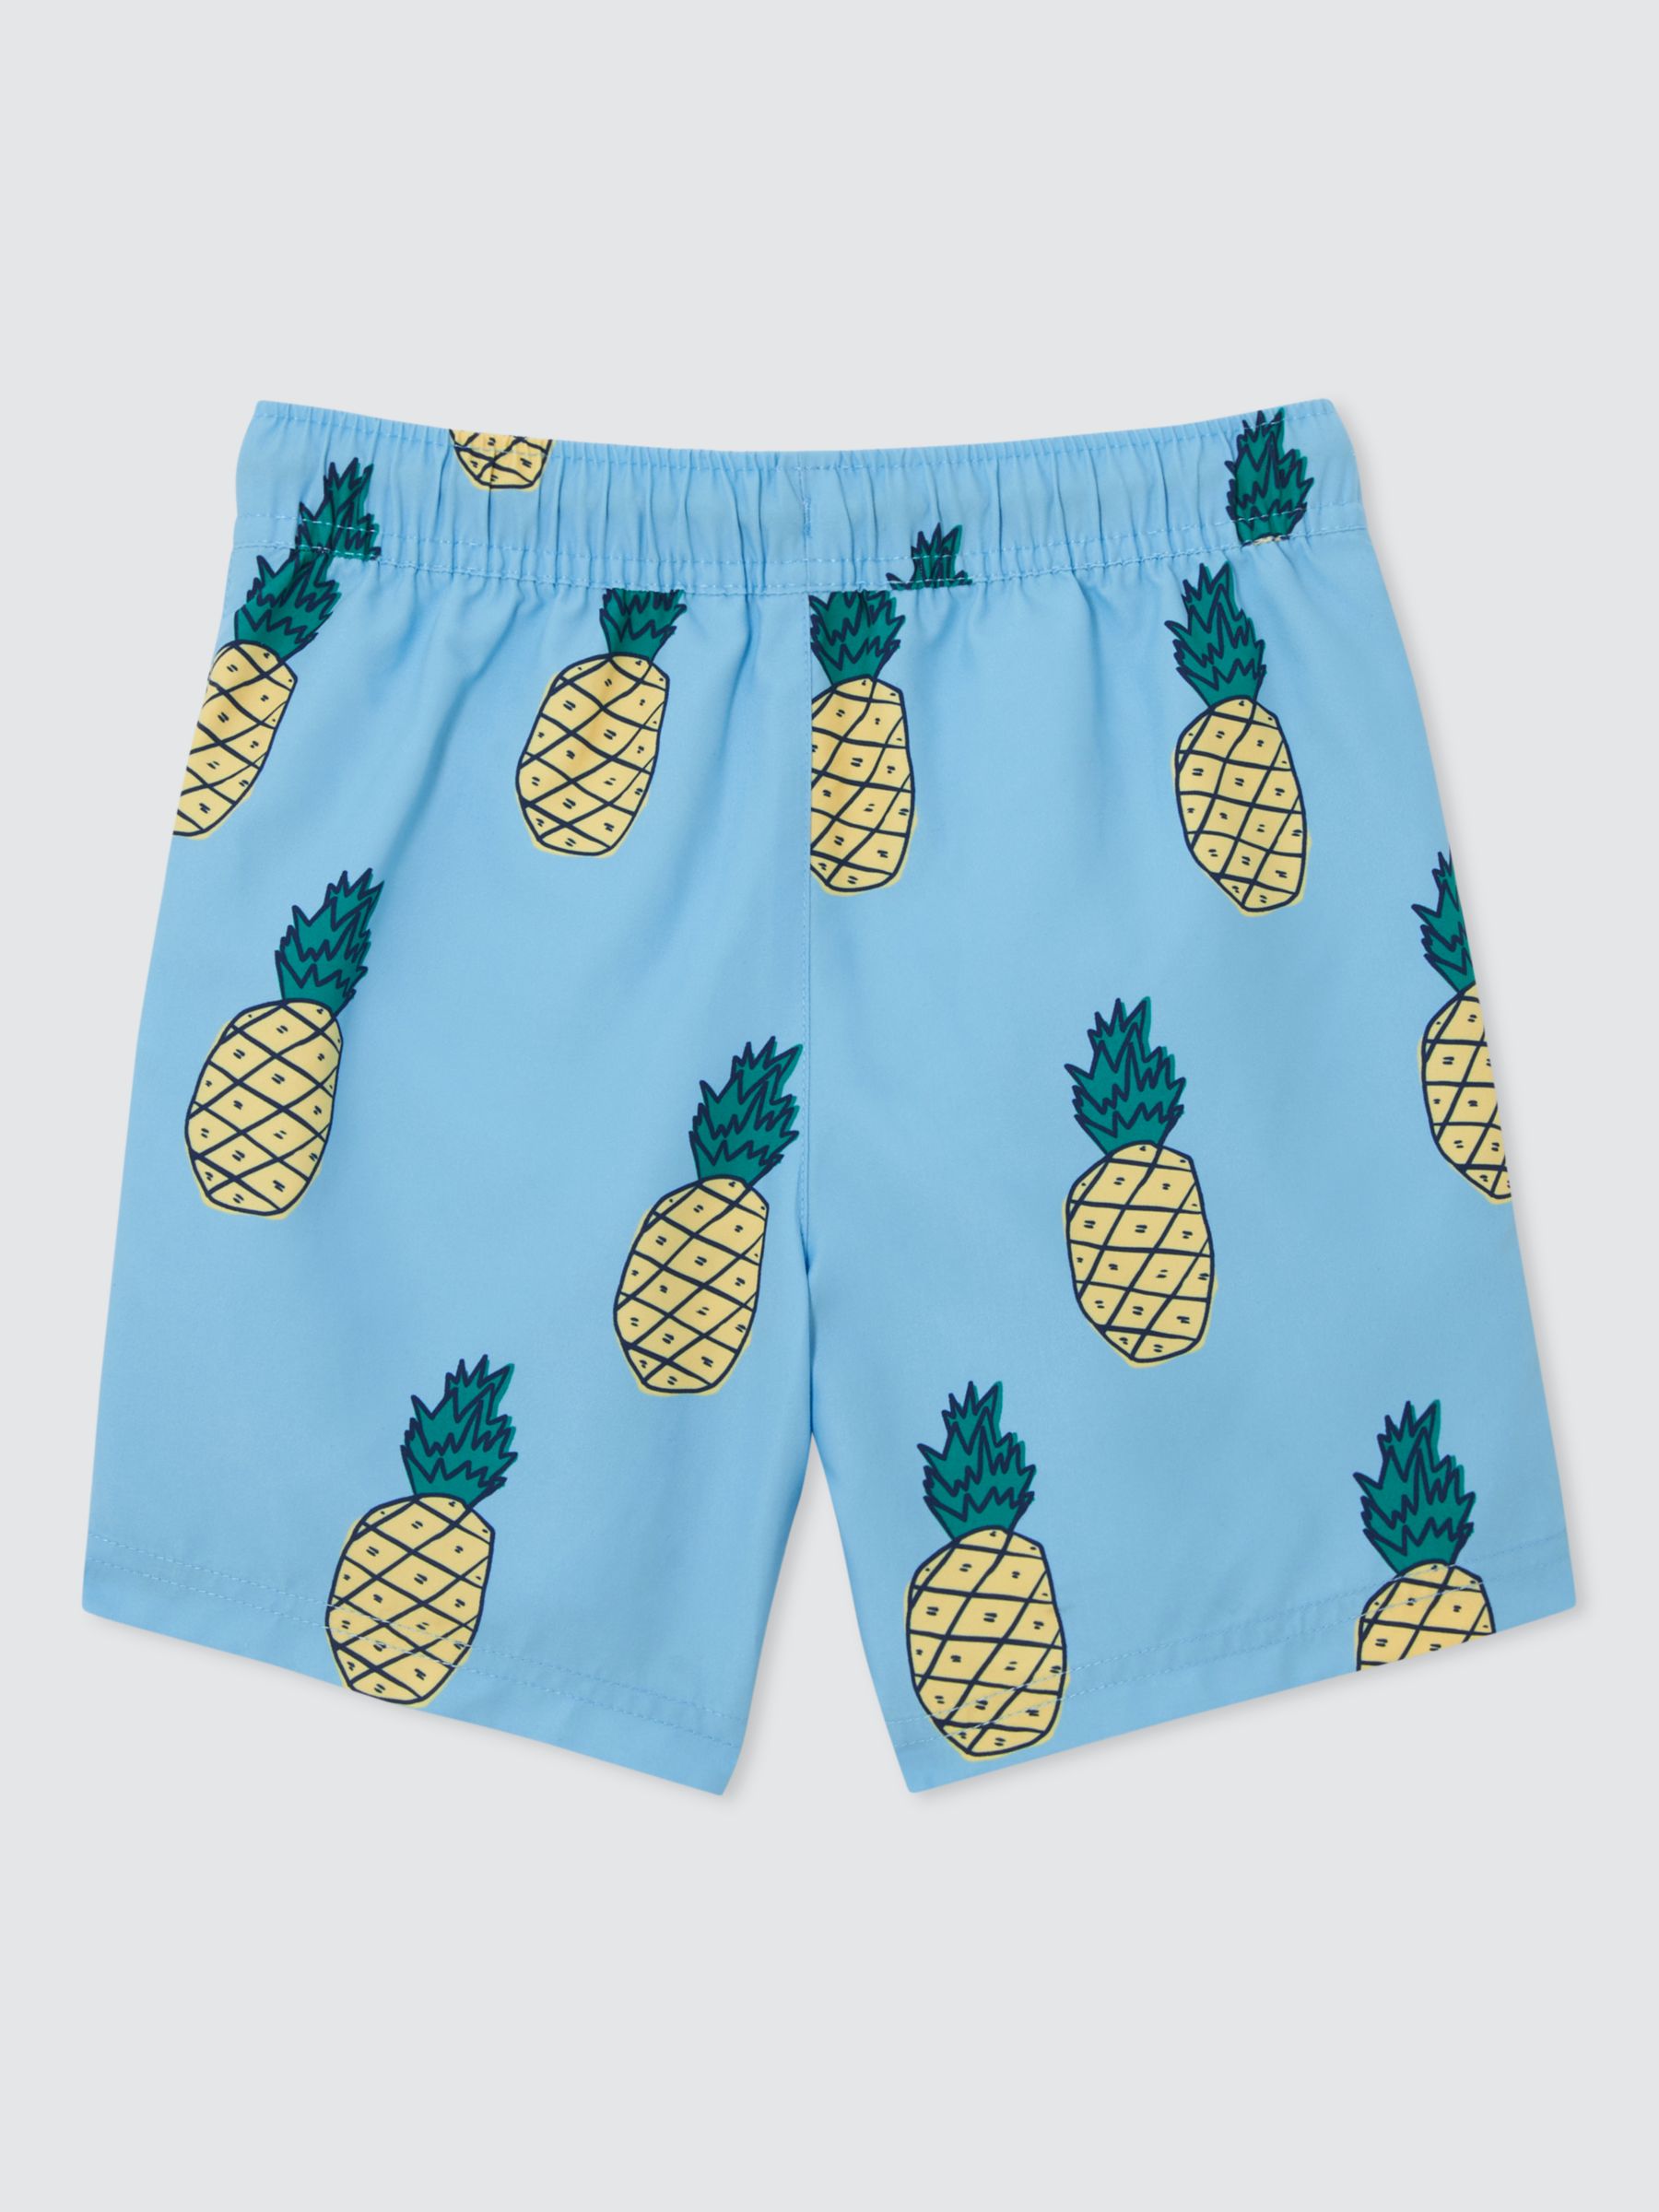 John Lewis ANYDAY Kids' Pineapple Print Swim Shorts, Blue, 9 years